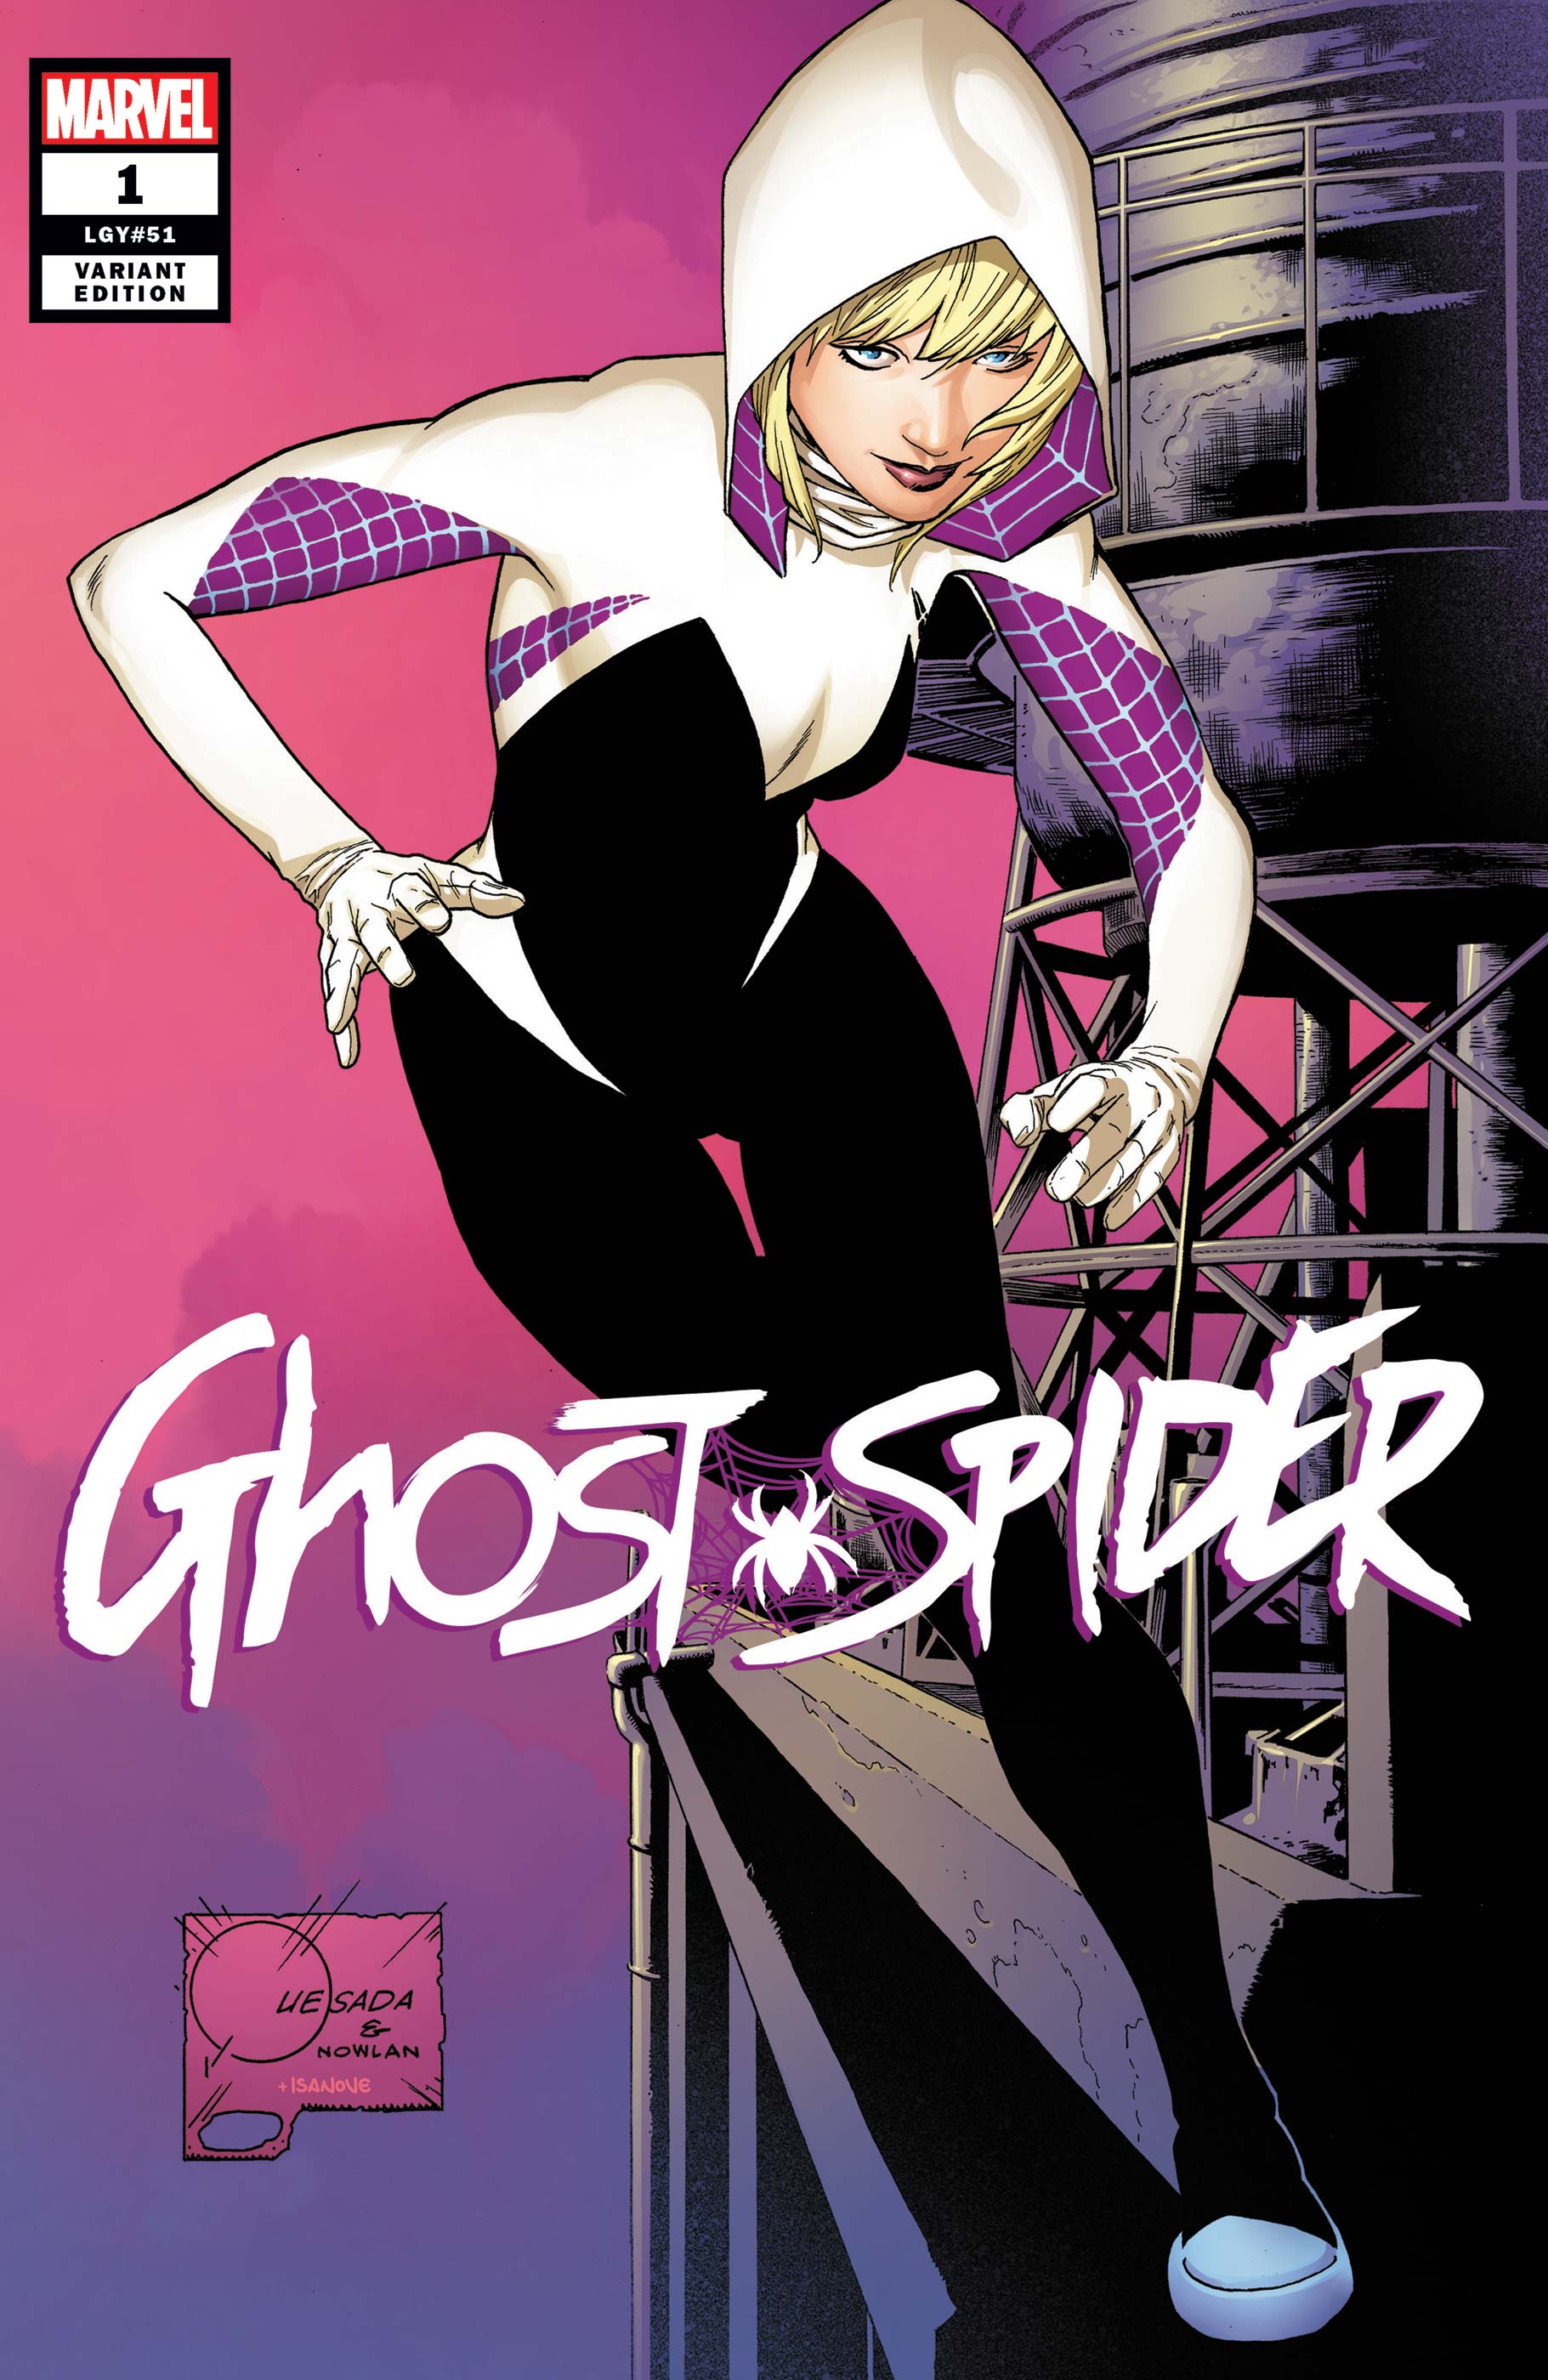 Ghost-Spider (2019) #1 (Variant)